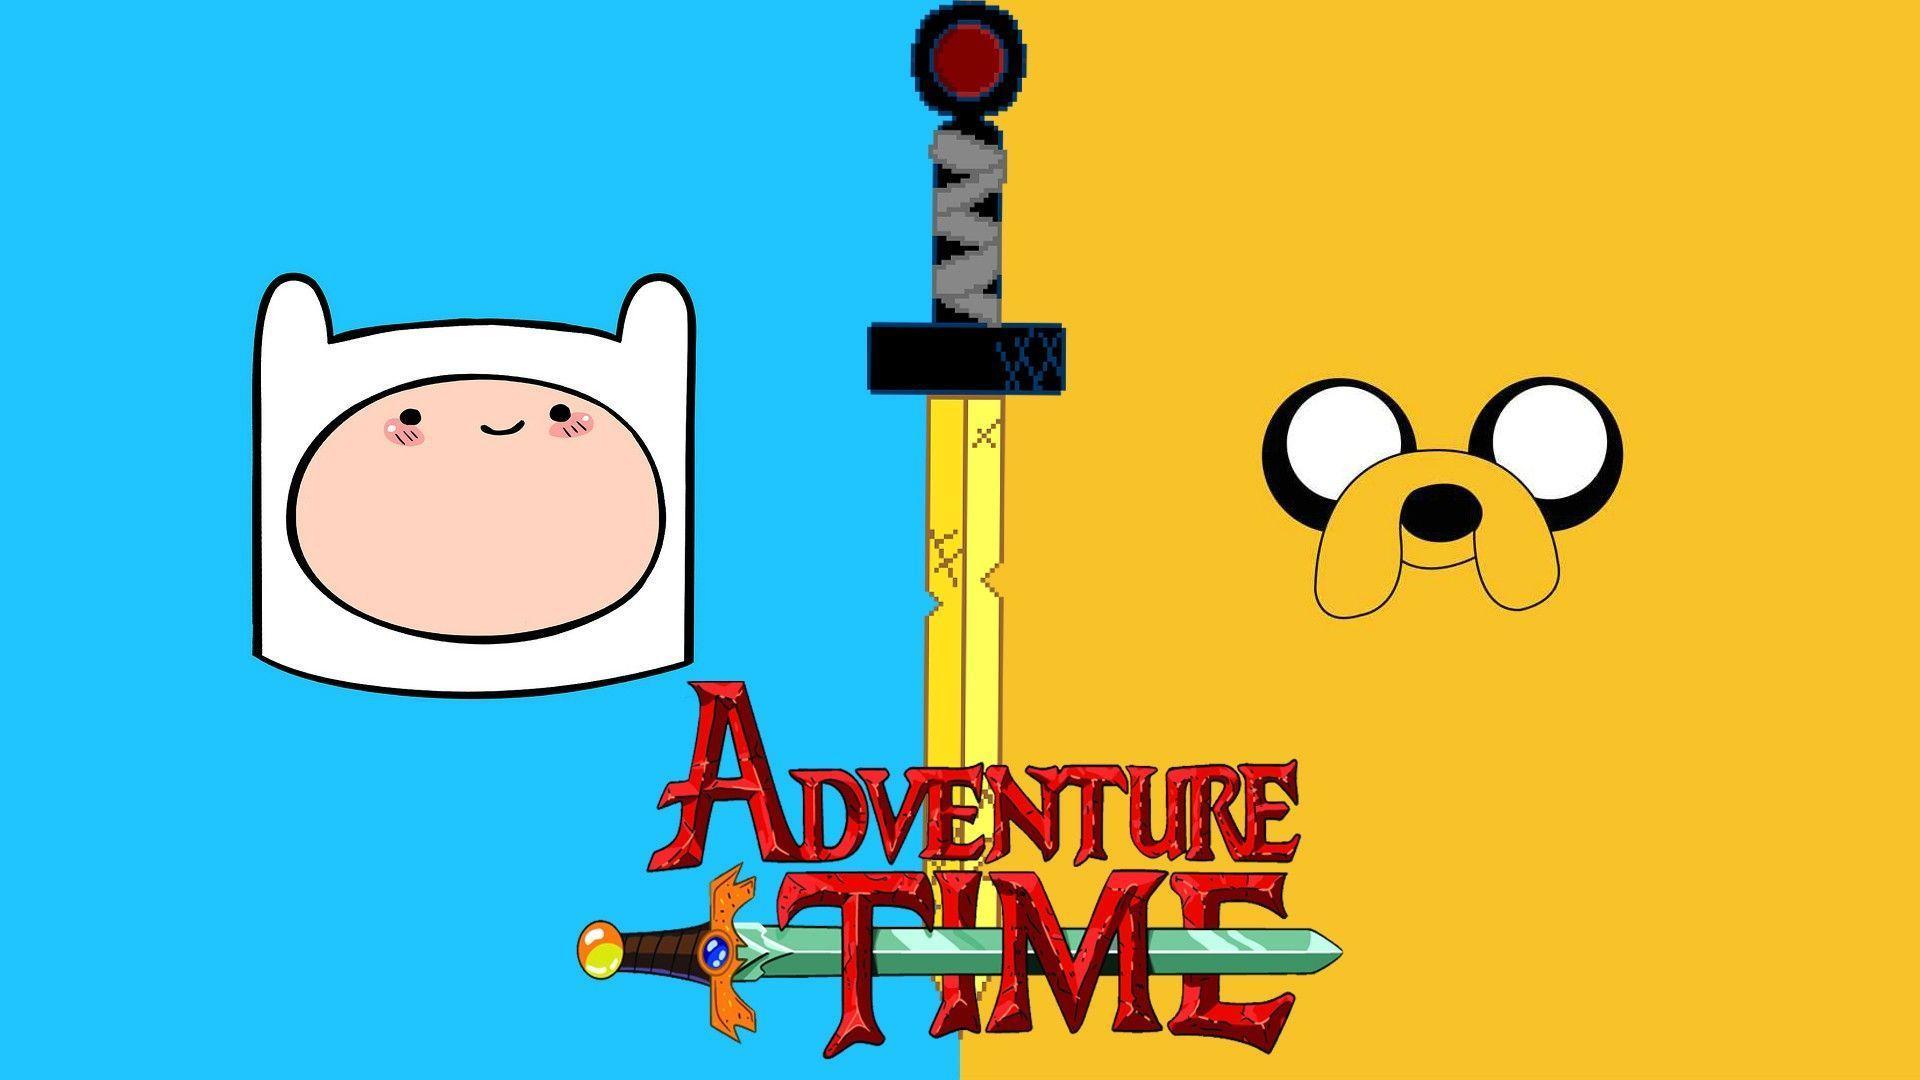 Download Adventure Time Kazuma Wallpaper HD 900x563PX Wallpaper